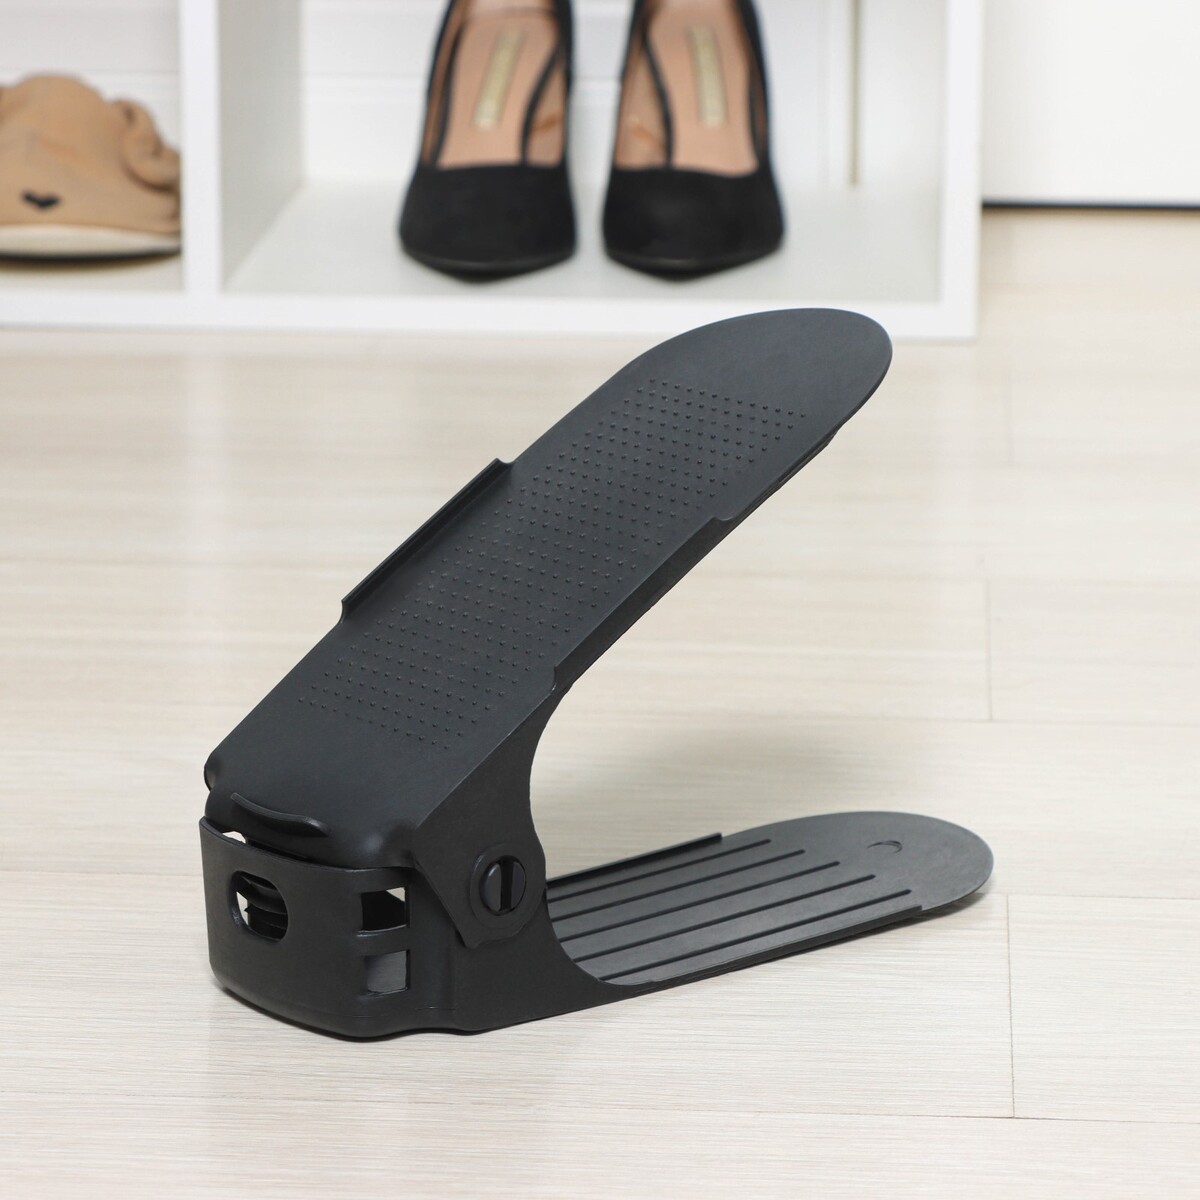 Подставка для хранения обуви регулируемая, 26×10×6 см, цвет черный подставка для обуви 3 х женева 23 600х645х270 мм пдо ж23 ч